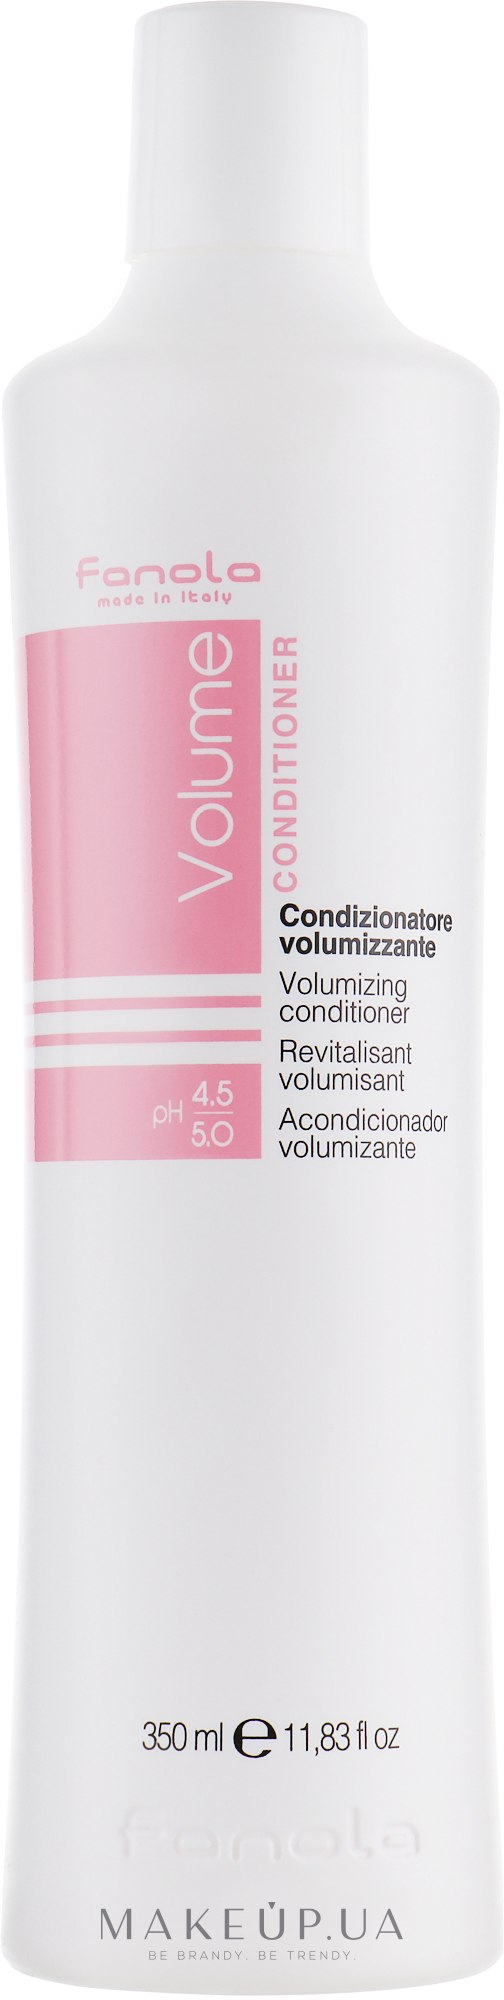 Кондиціонер для тонкого волосся - Fanola Volumizing Conditioner — фото 350ml